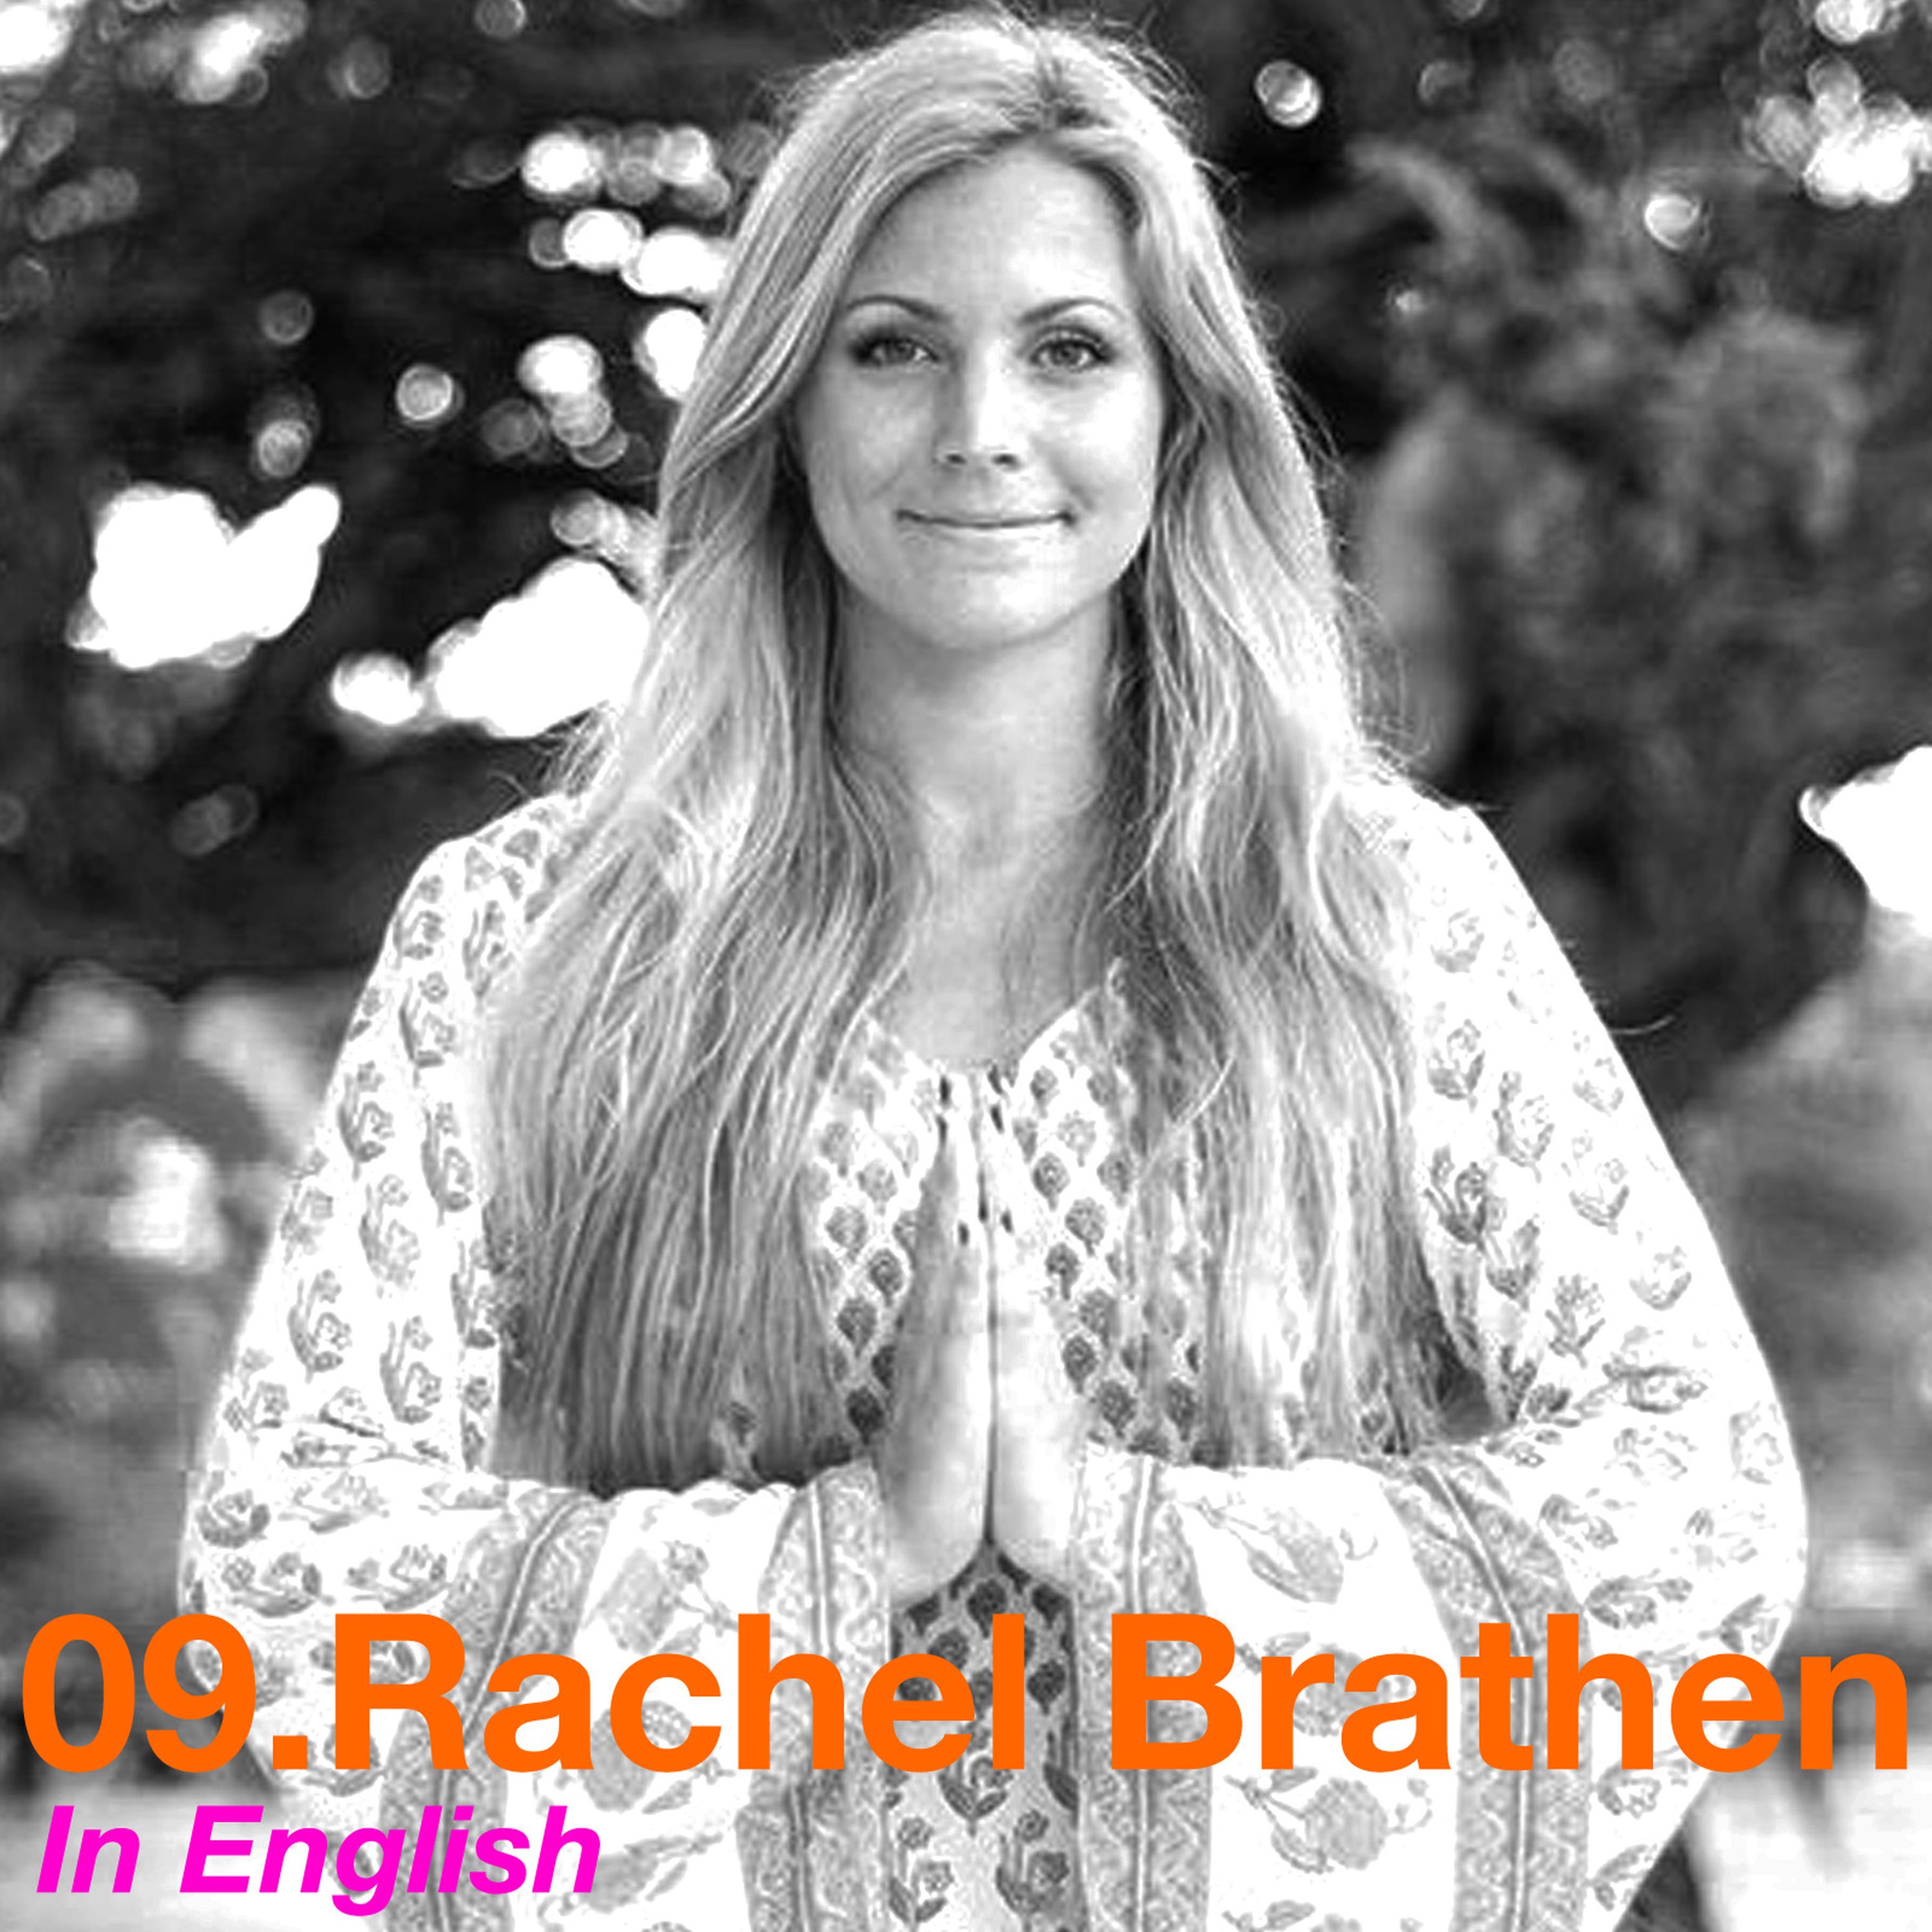 09.Rachel Brathen - Yoga girl (English)